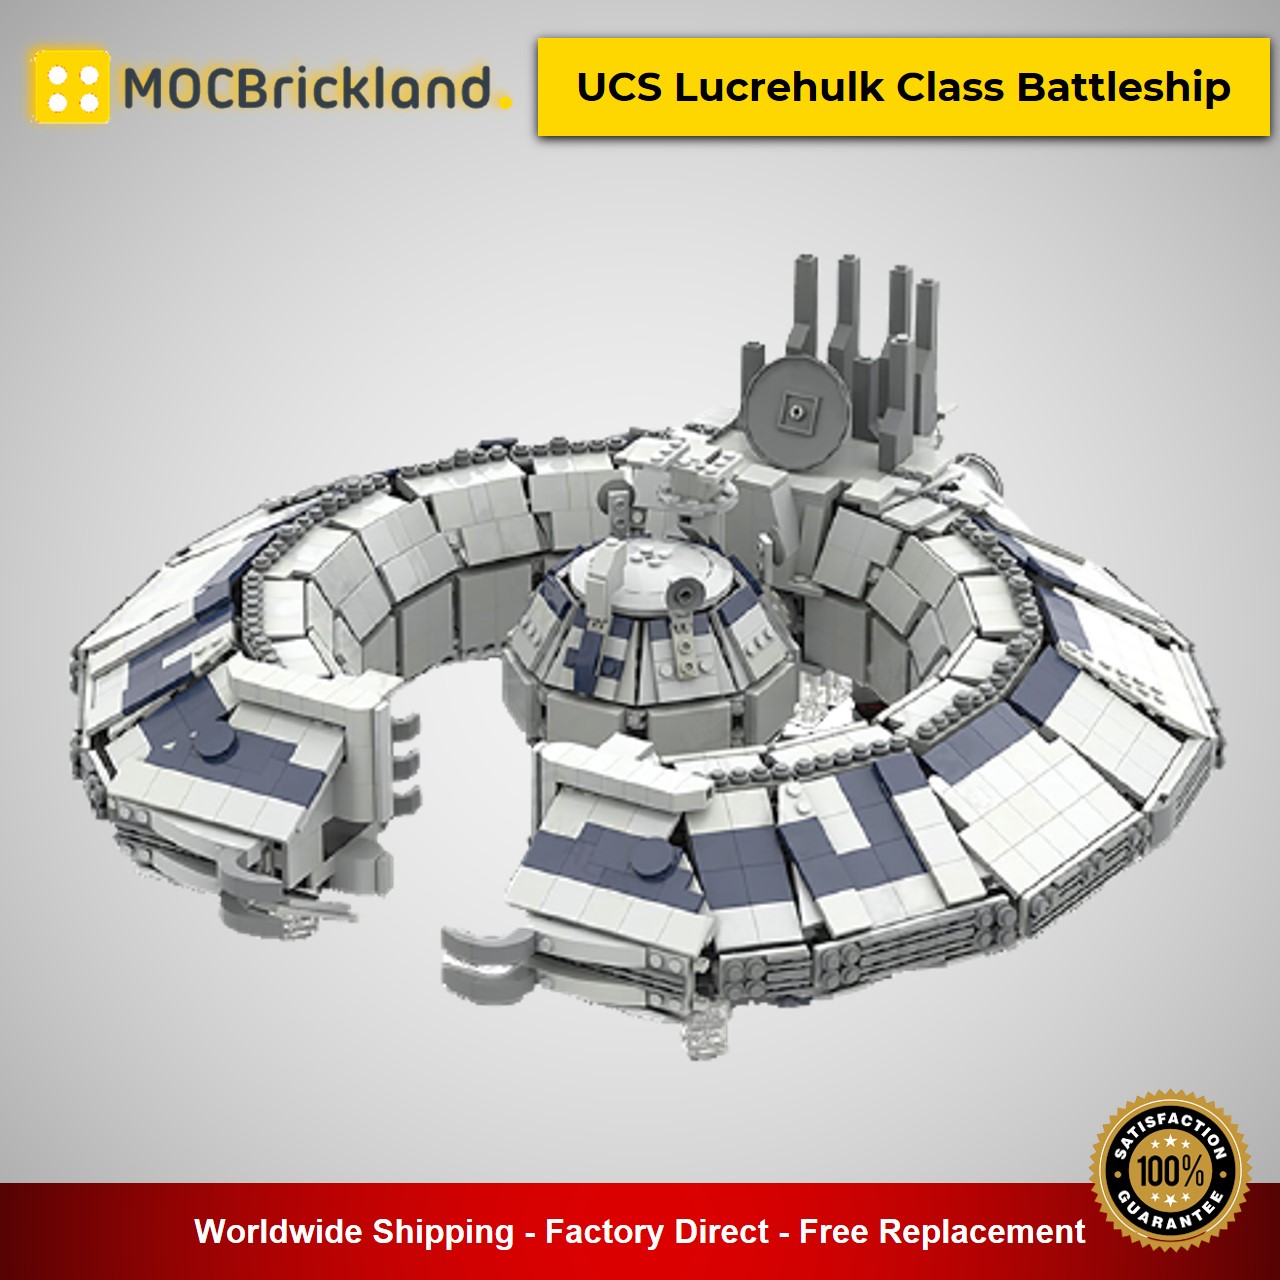 MOCBRICKLAND MOC-37000 UCS Lucrehulk Class Battleship